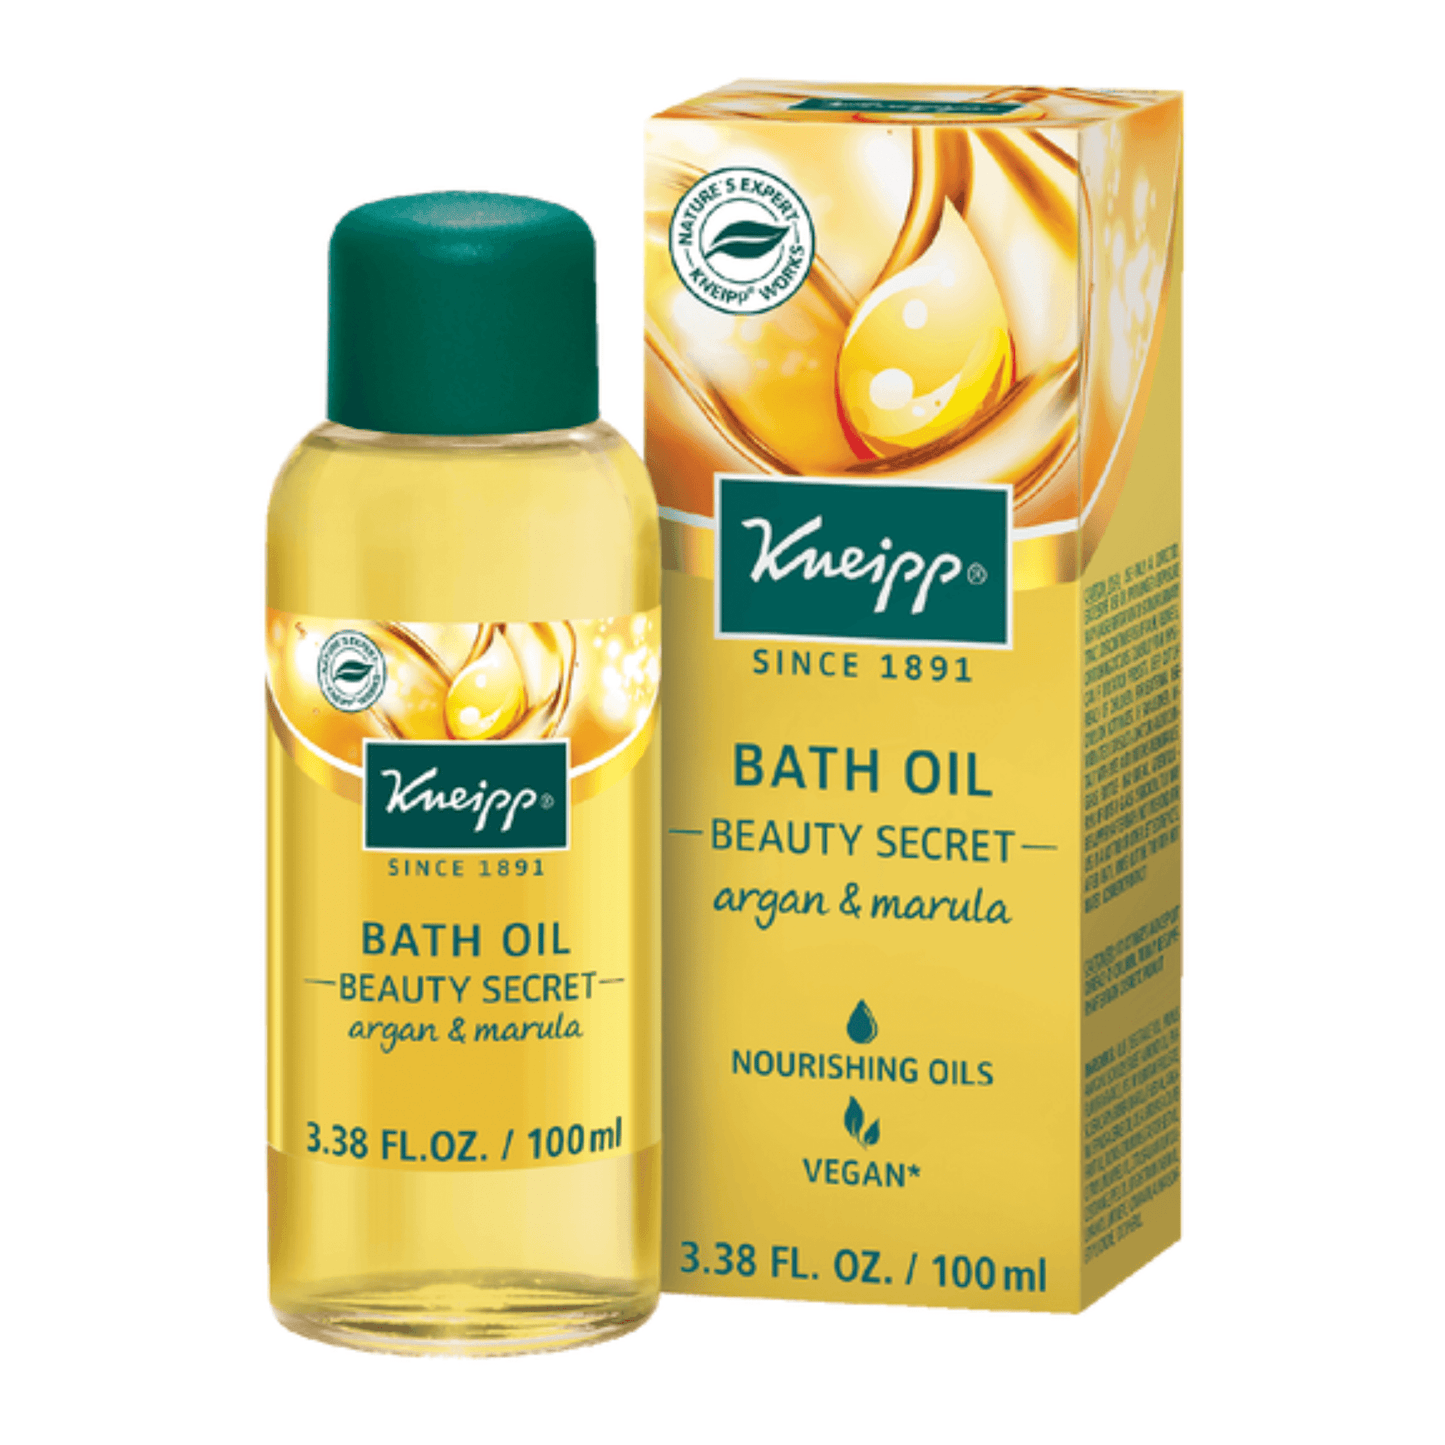 Primary Image of Beauty Secret Bath Oil